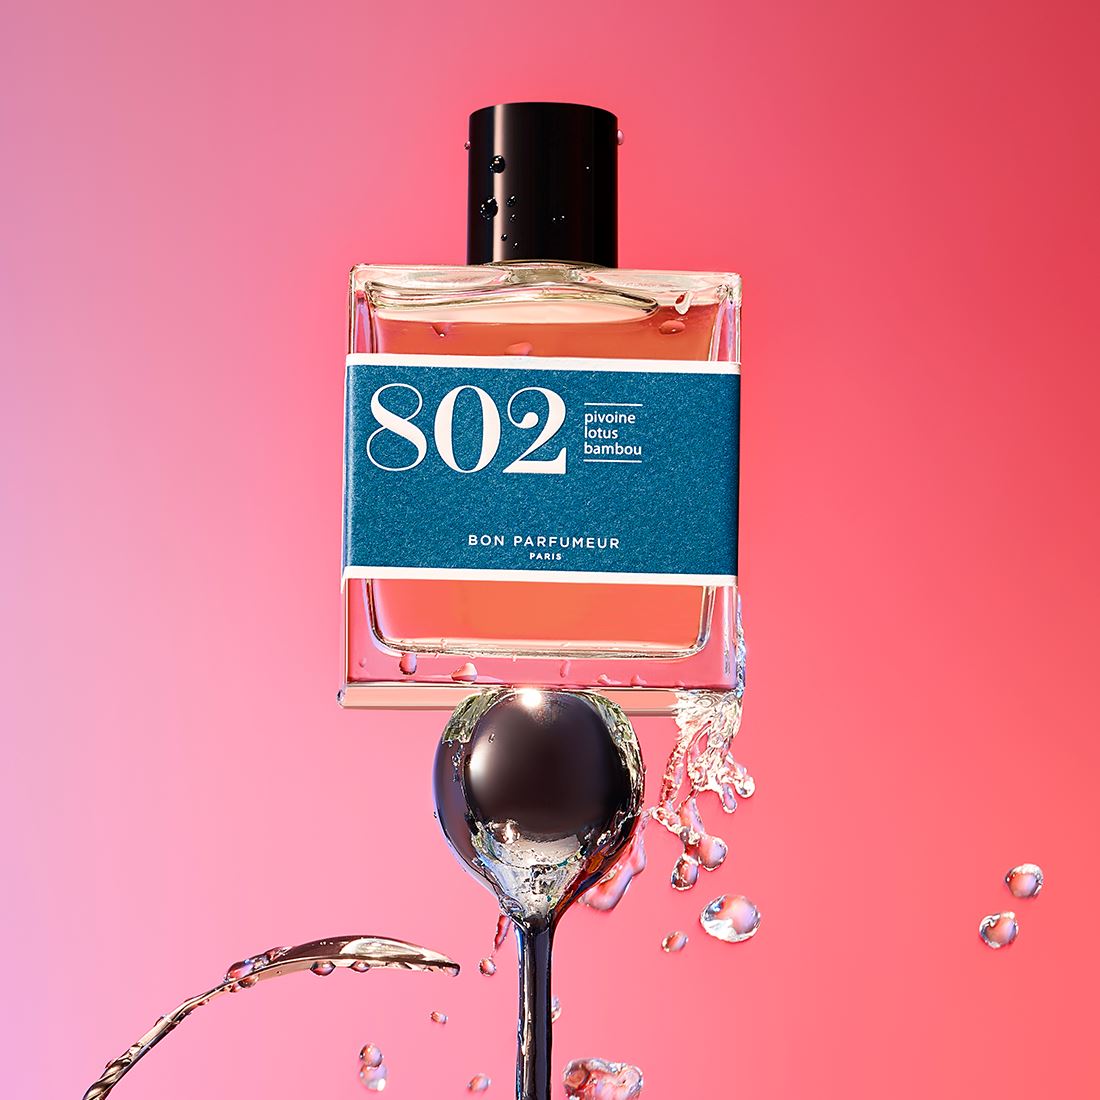 Bon Parfumeur - 802